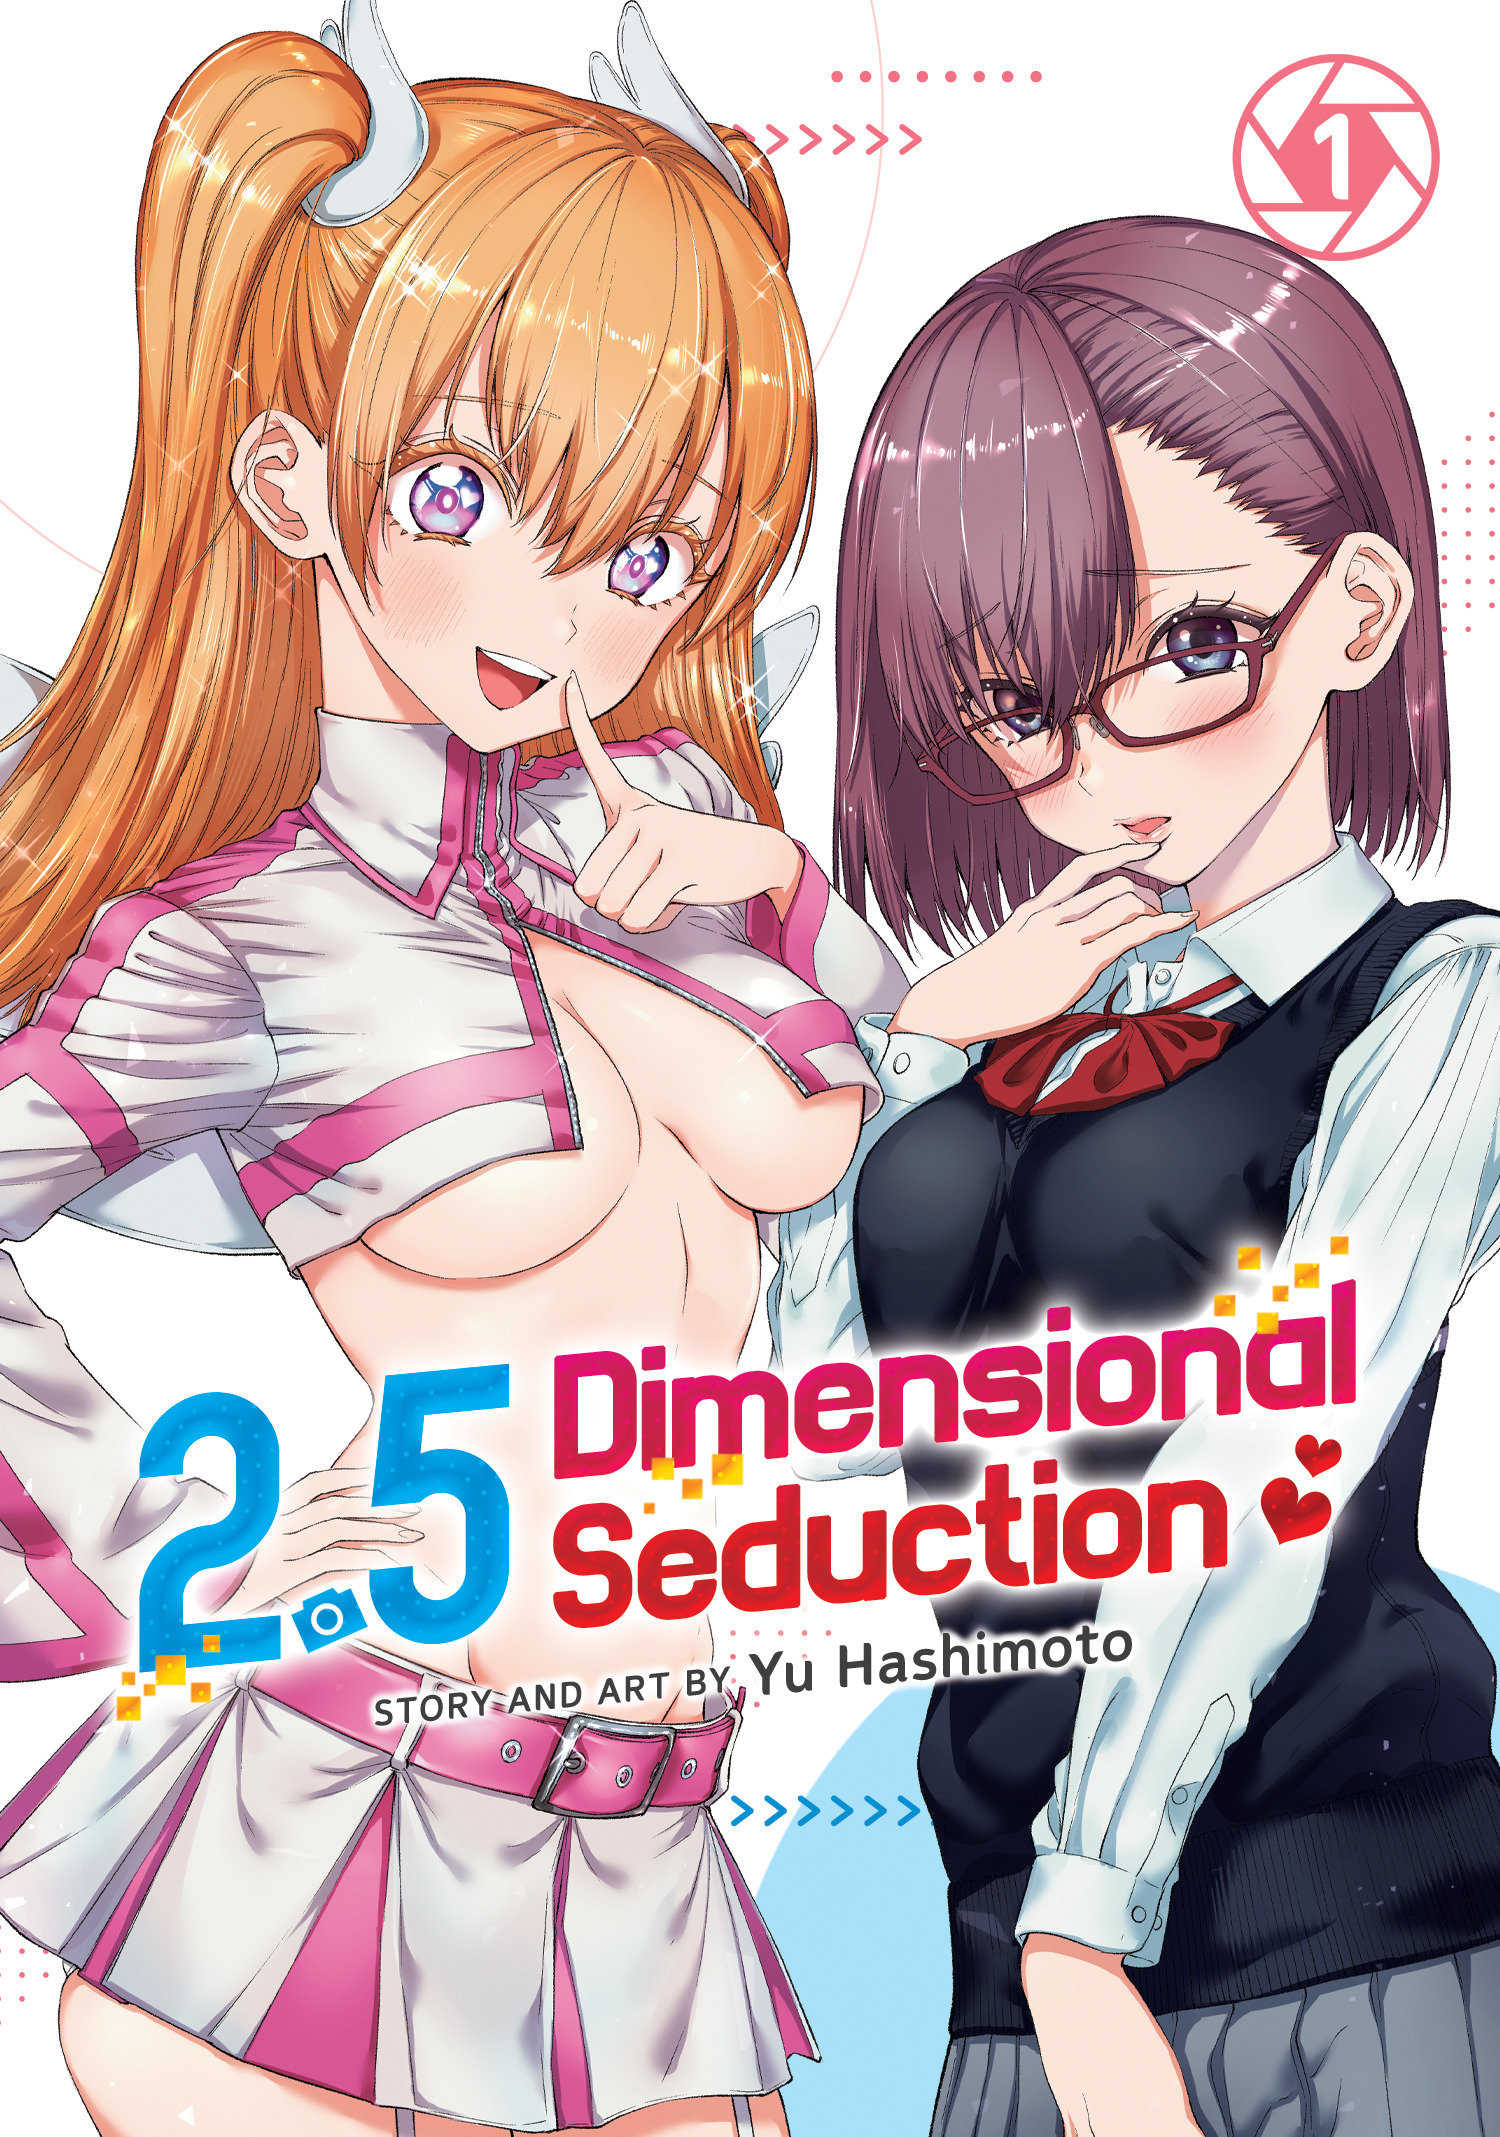 2.5 Dimensional Seduction Manga Volume 1